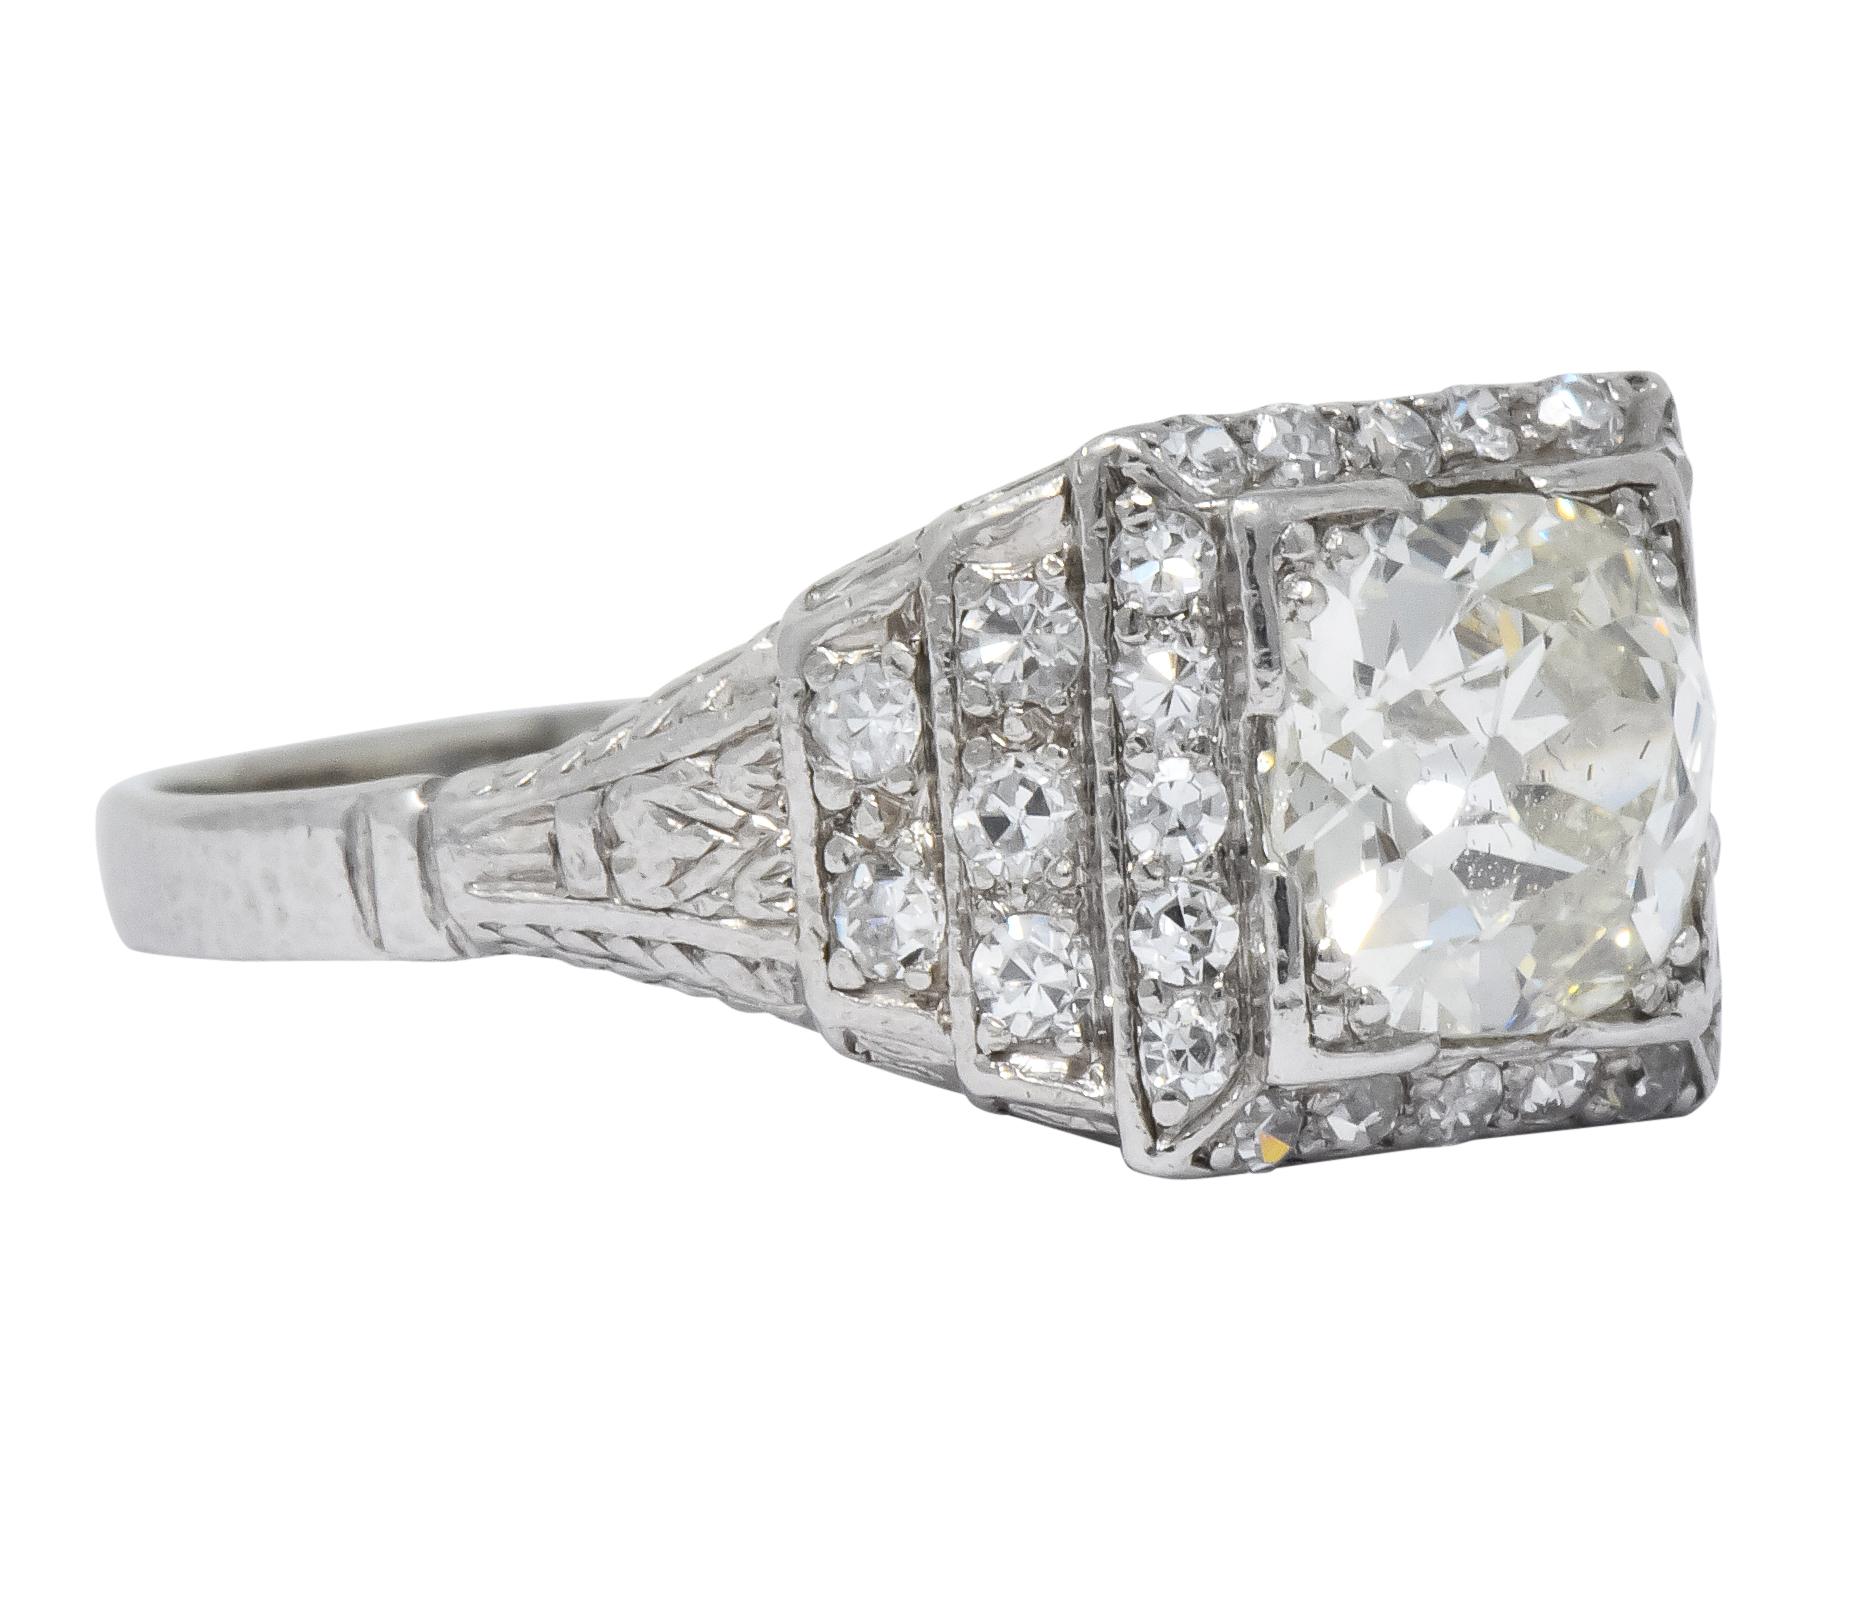 1.95 carat diamond ring